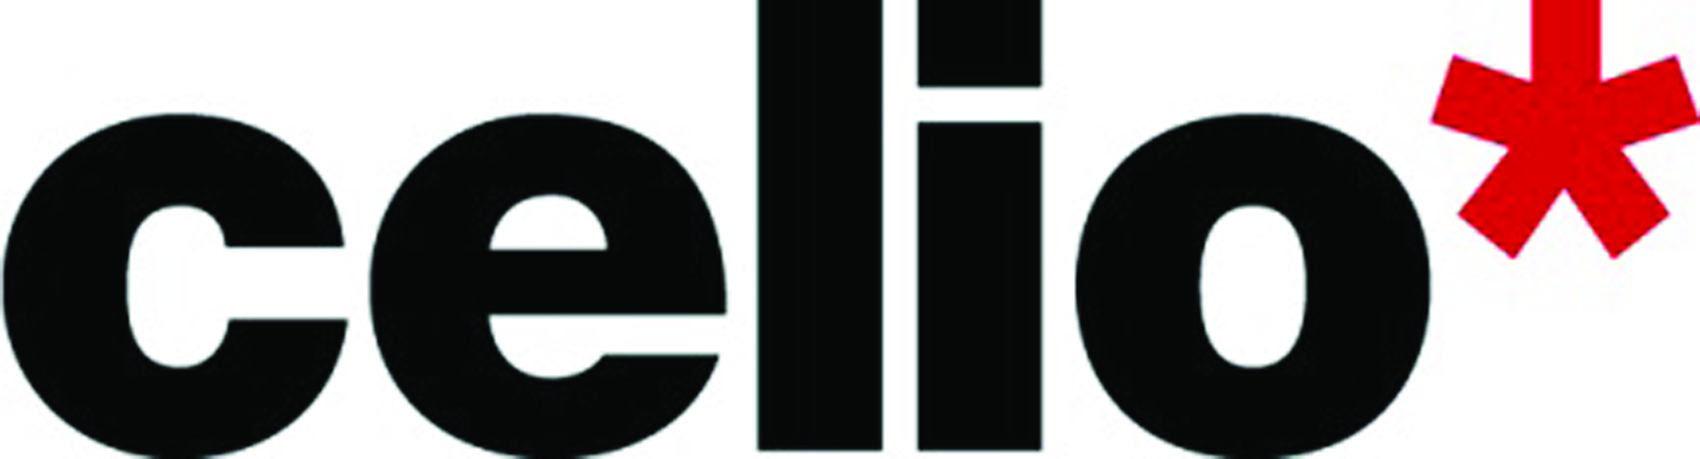 celio-logo-hd-jpg